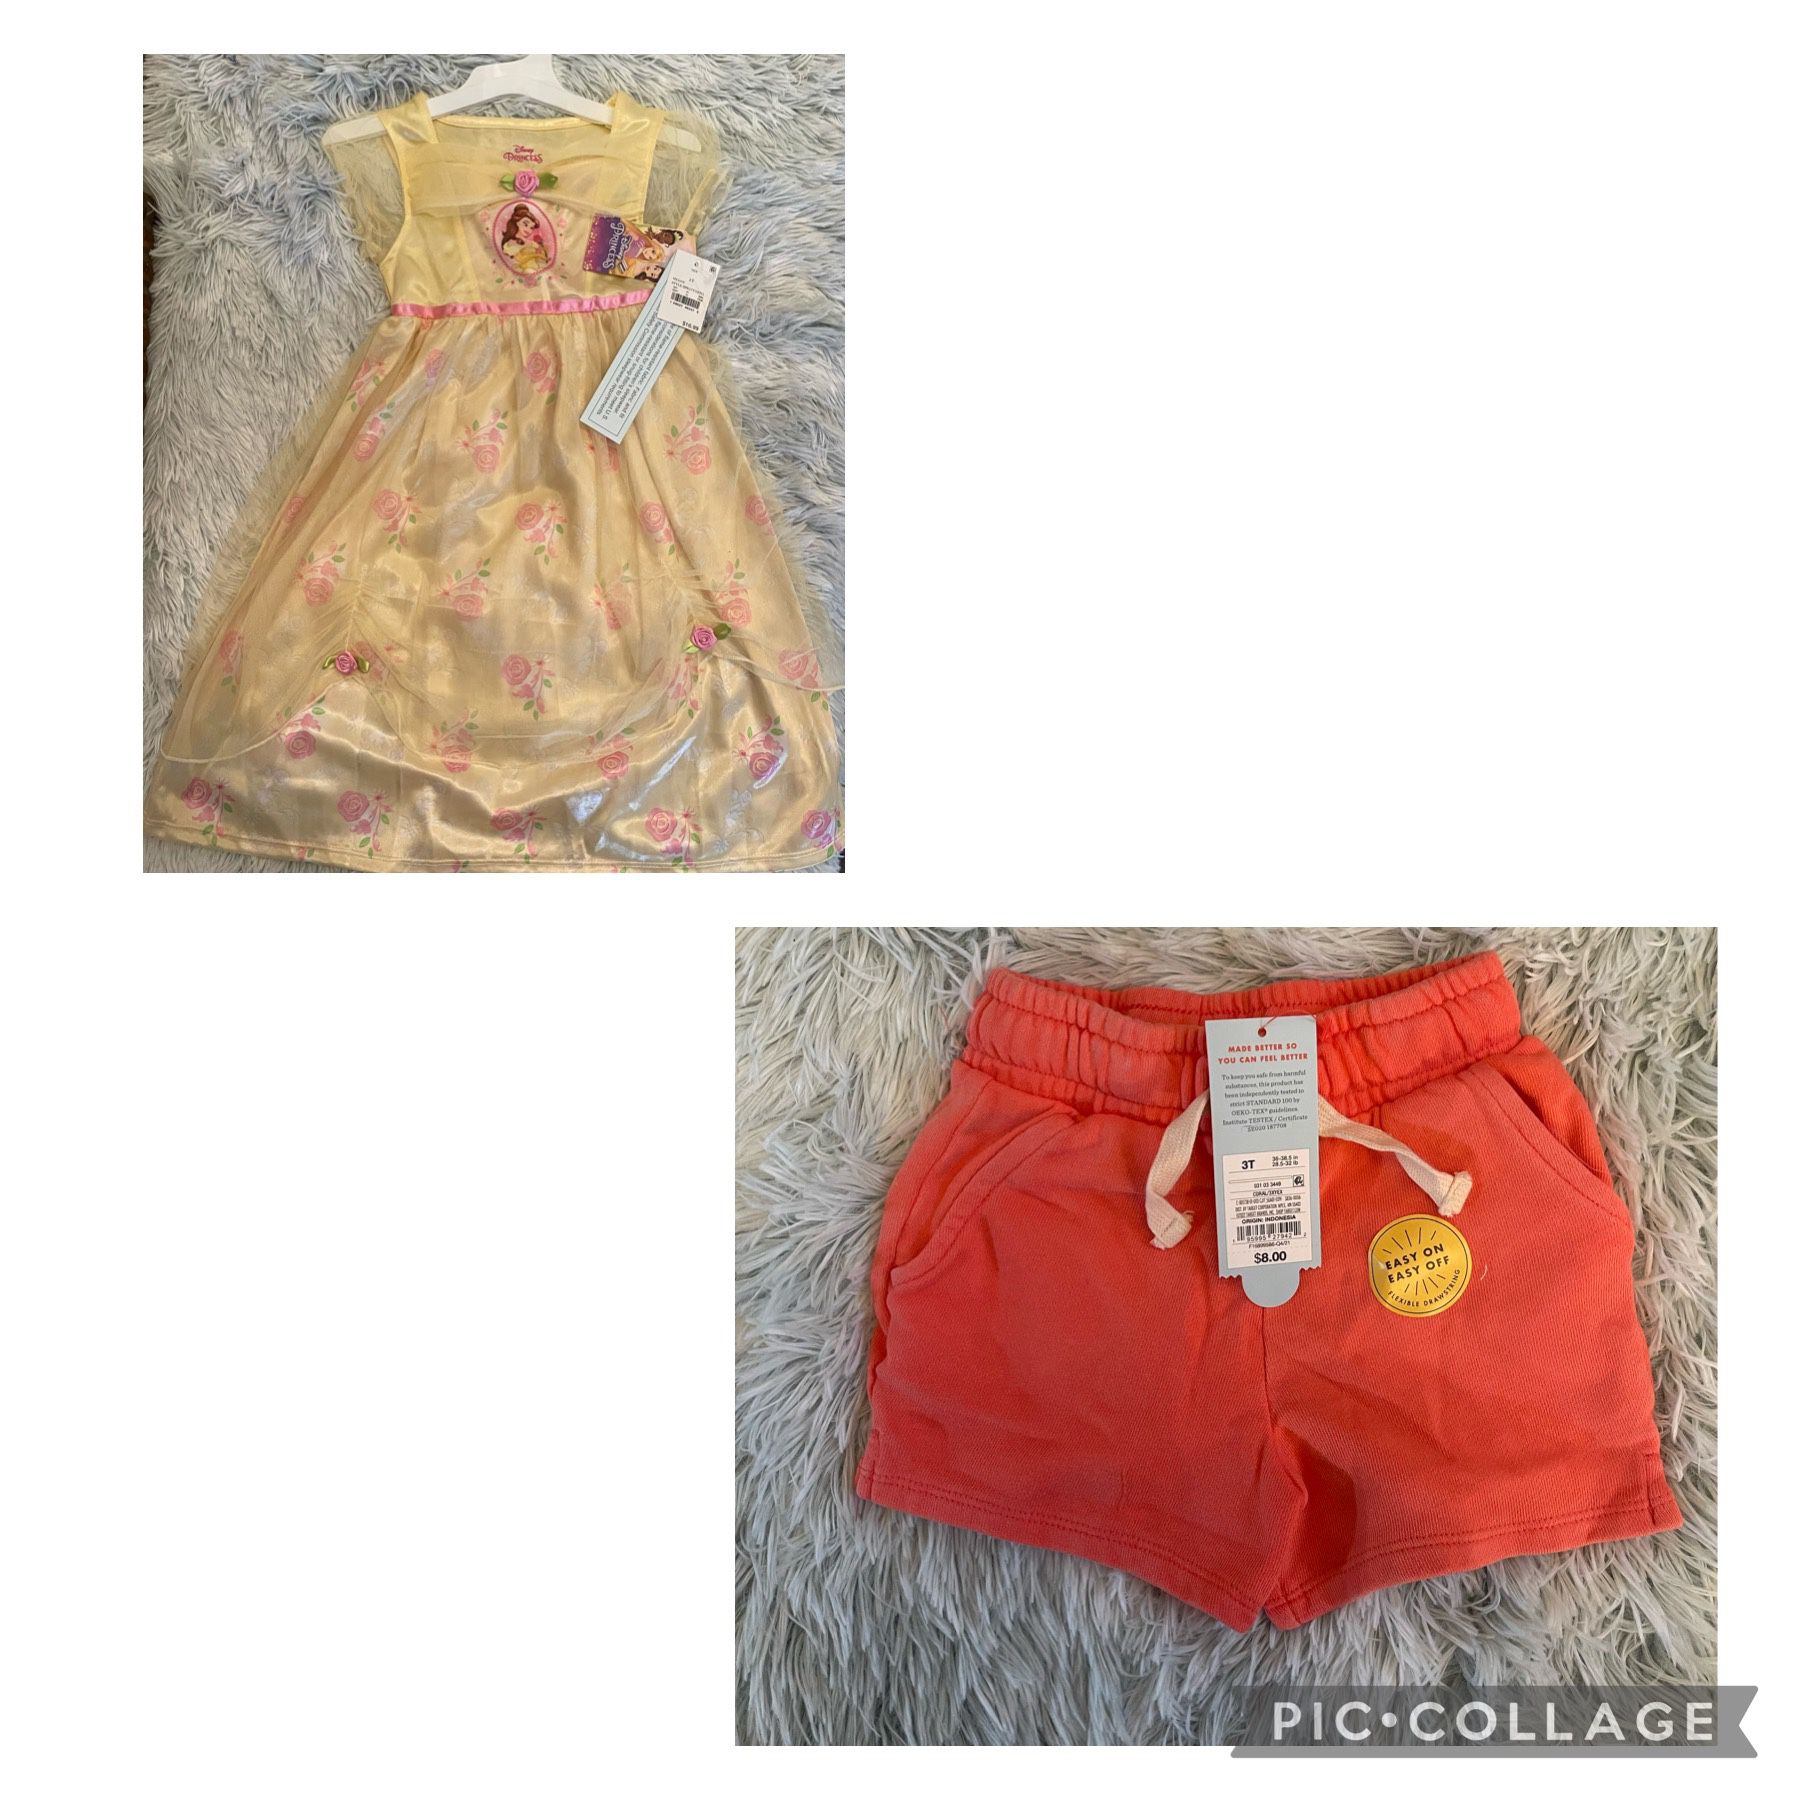 New! Bundle!!  1 Disney Princess Dress 3T and 1 Cat & Jack girls shorts size 3T